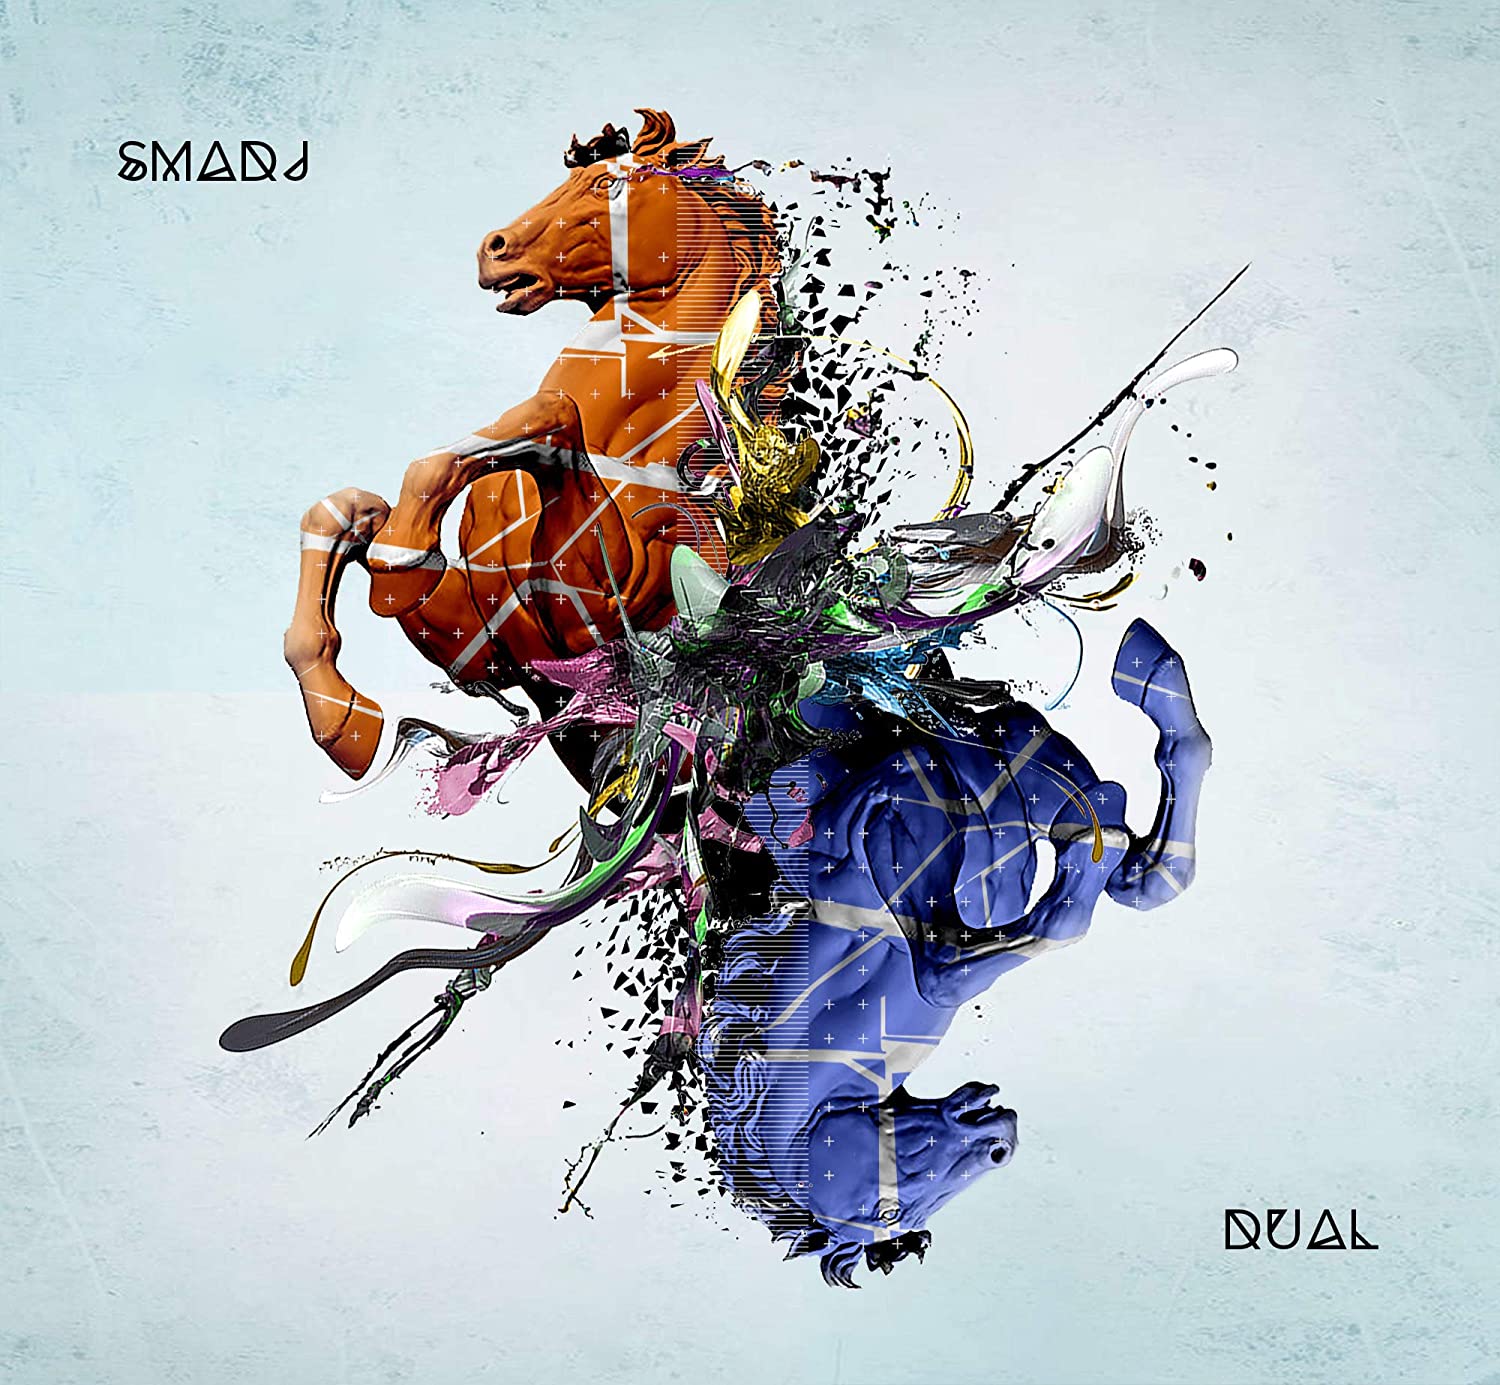 SMADJ - Dual cover 